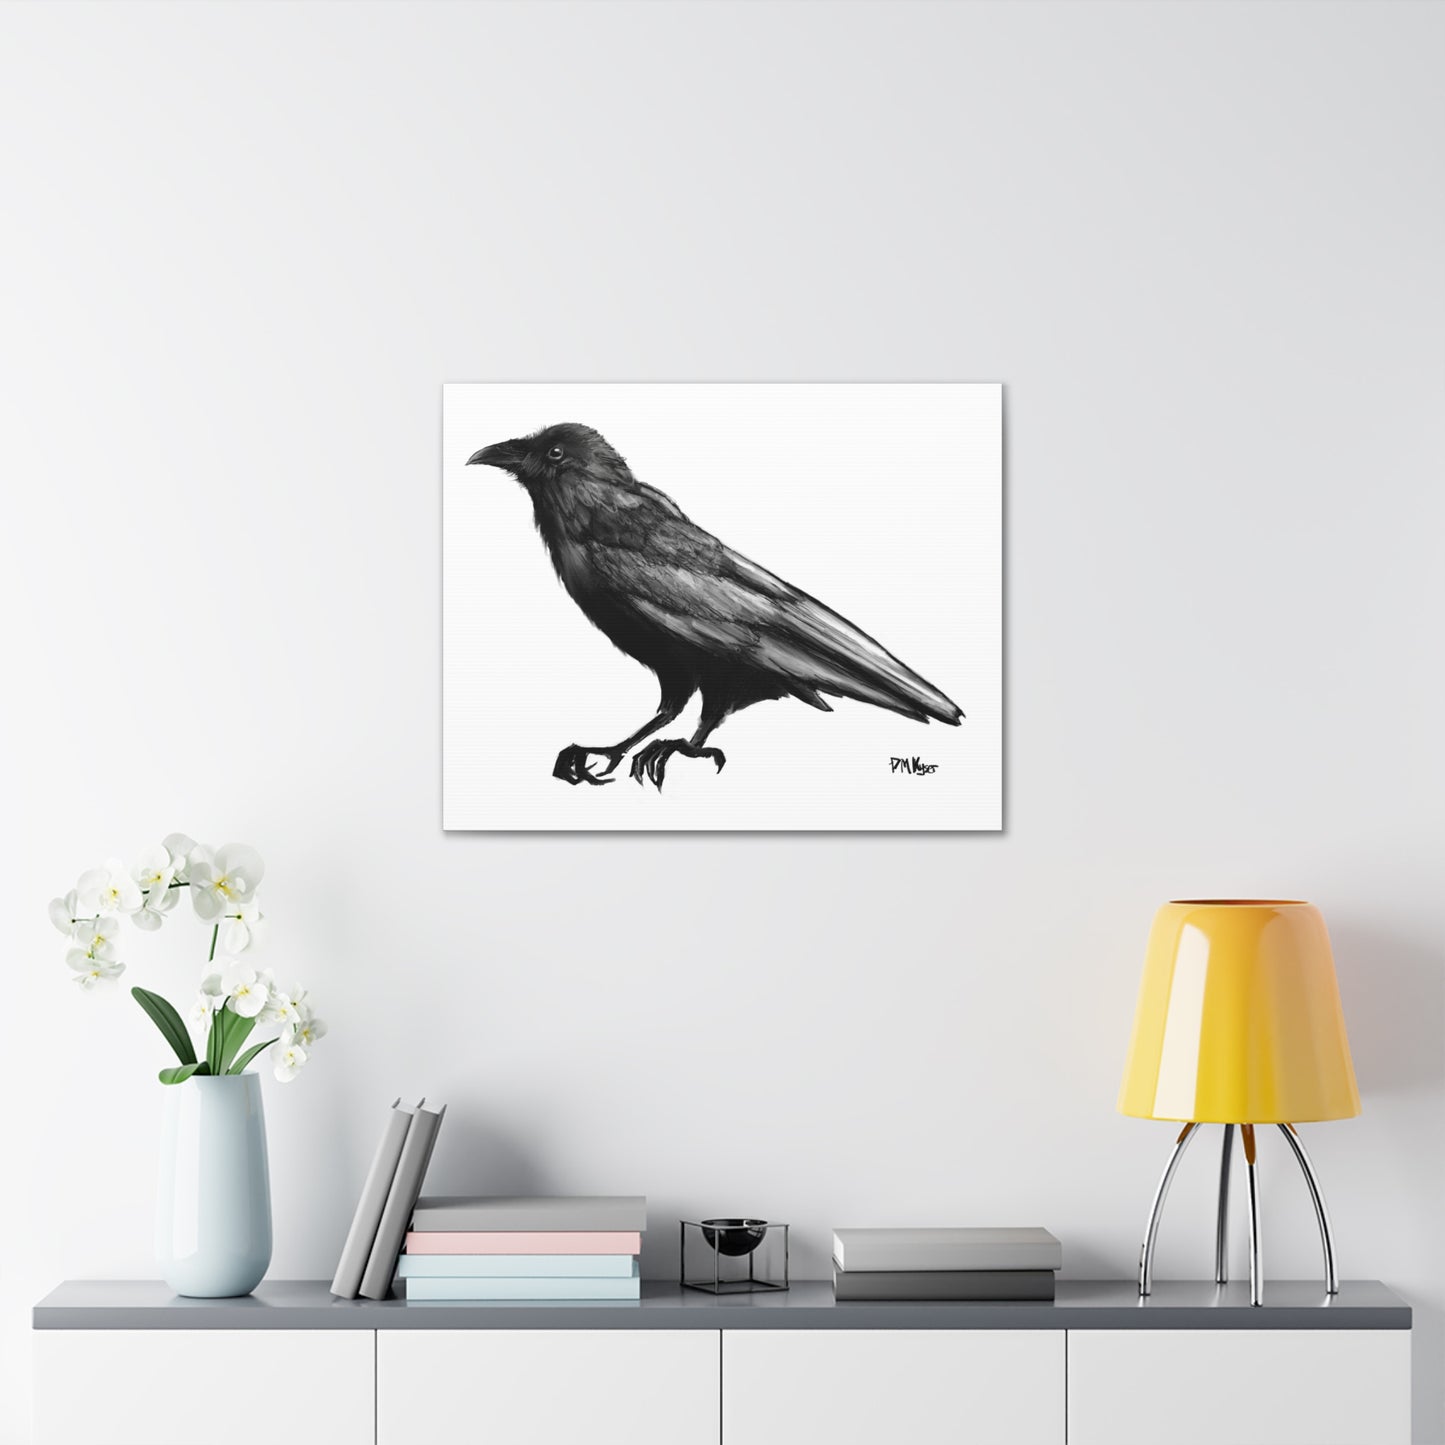 Raven Canvas Gallery Wrap